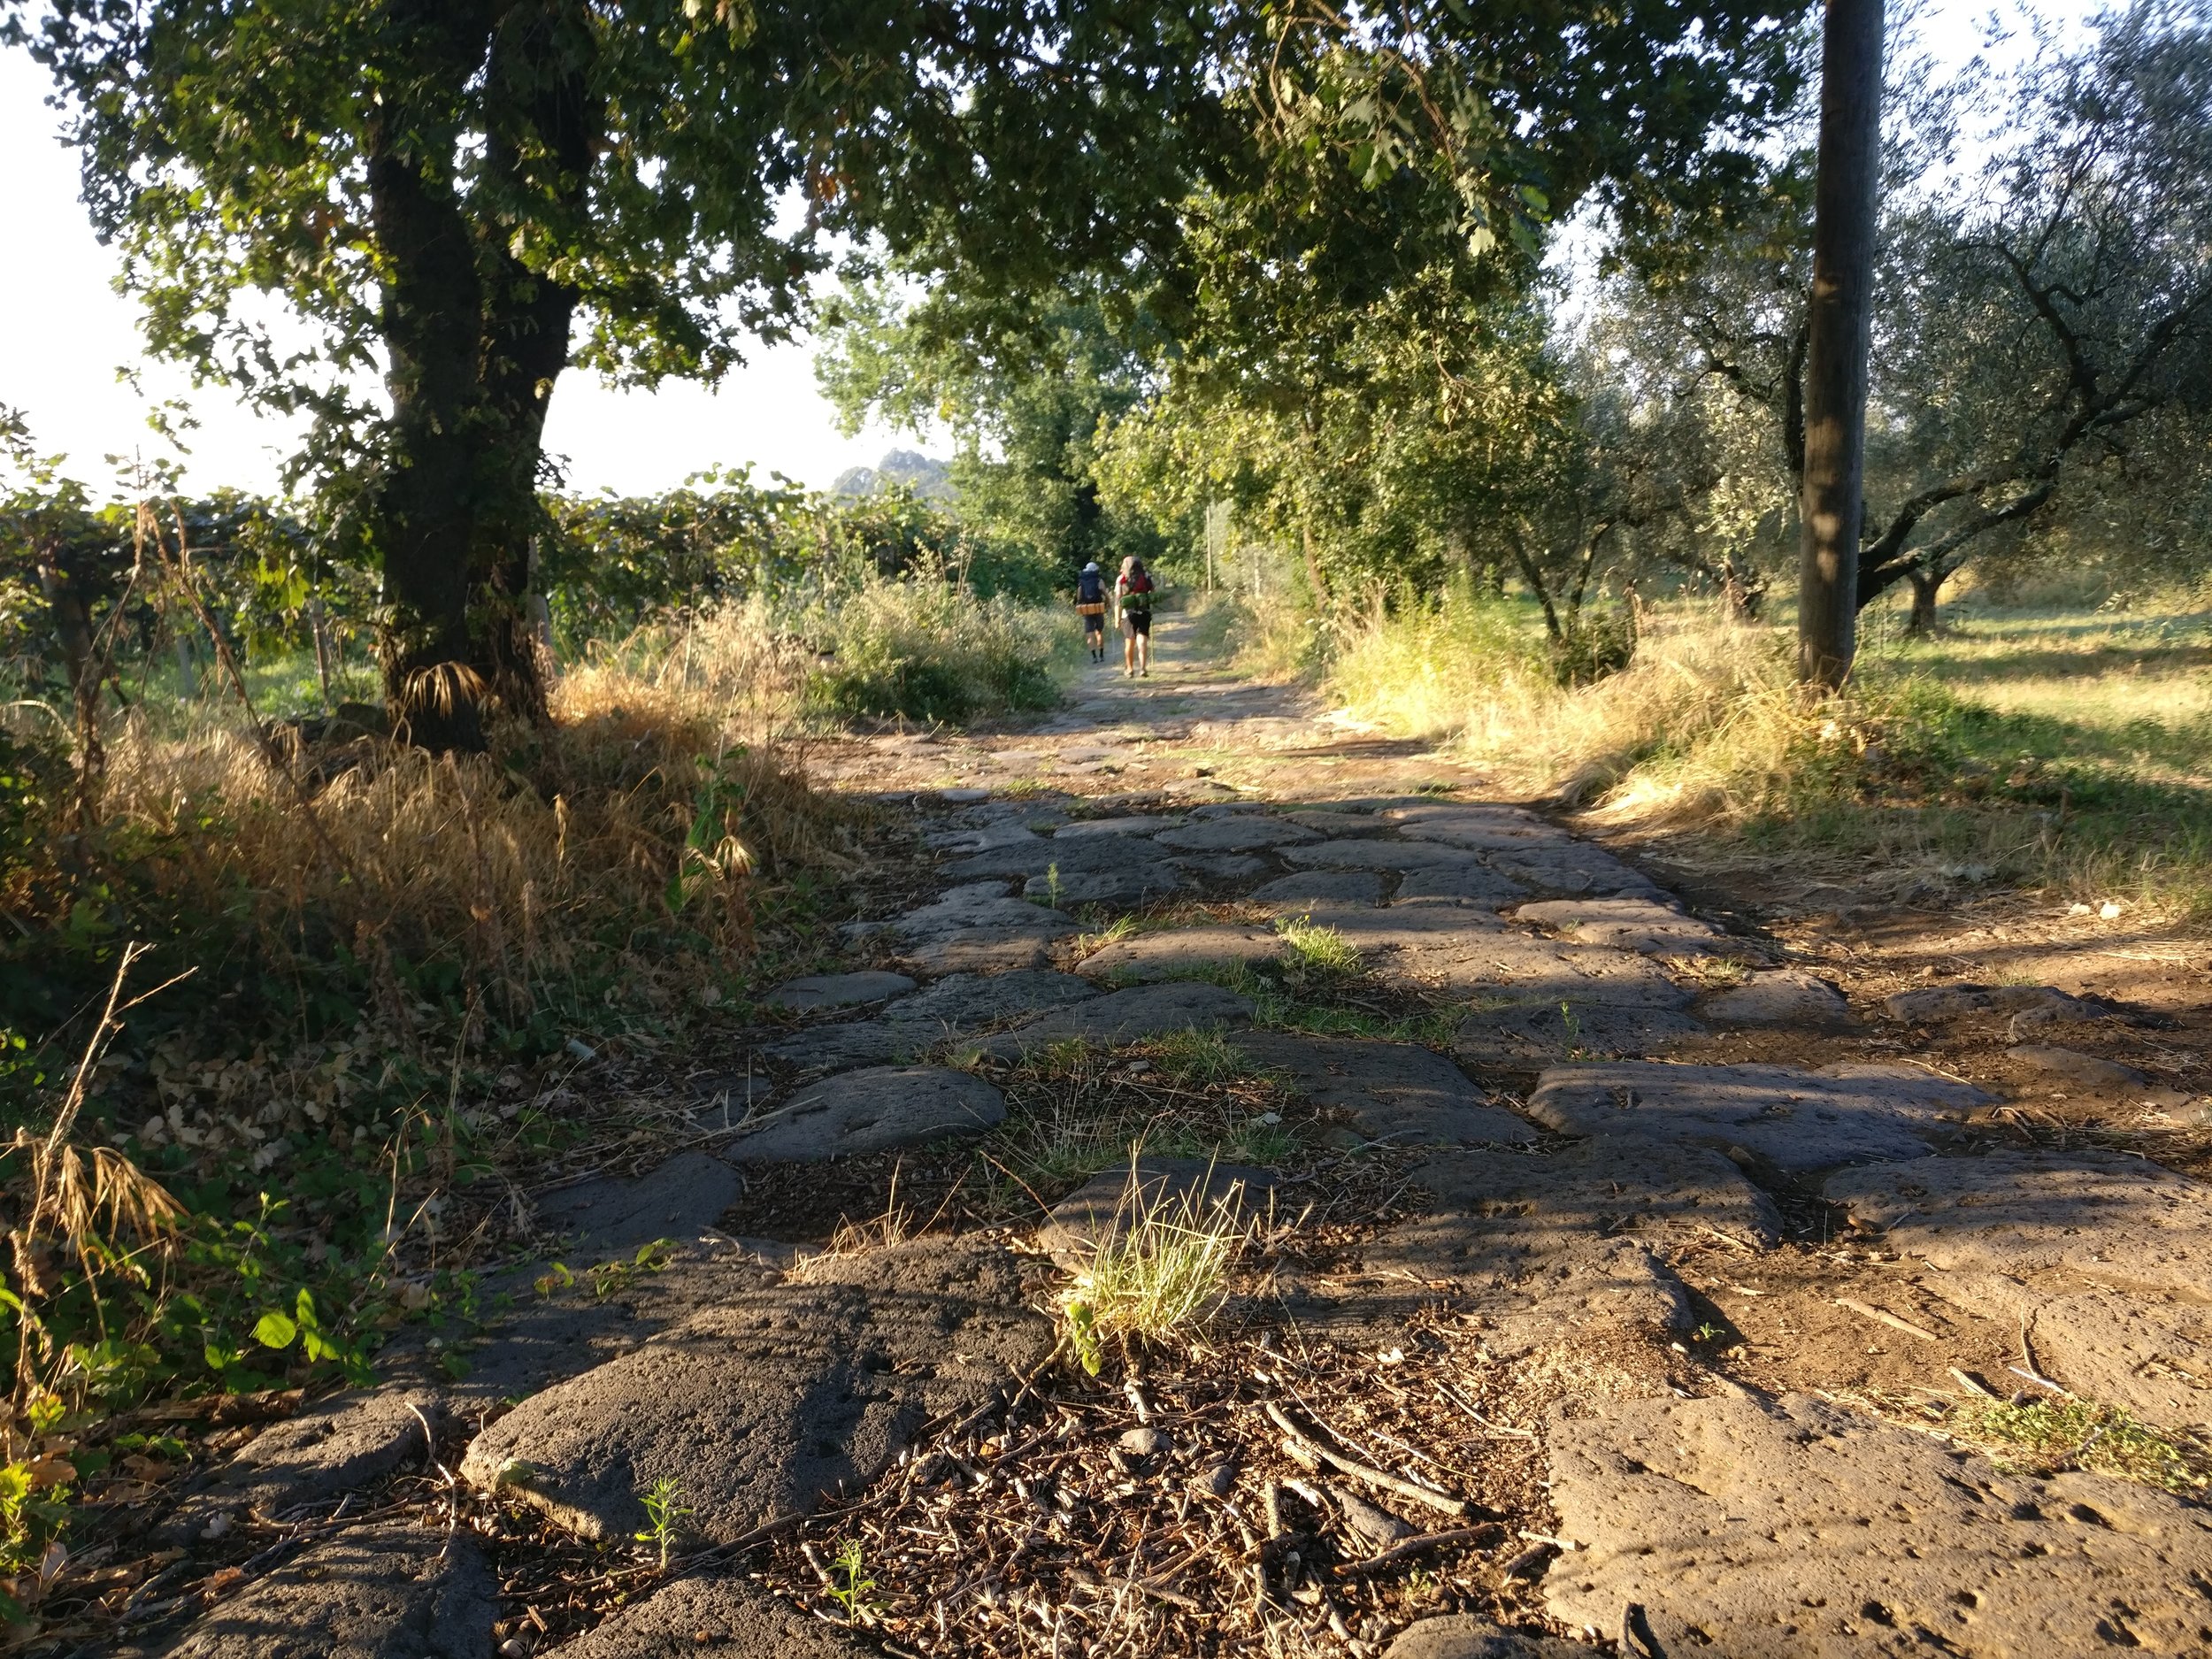  Walking along an ancient Roman road 